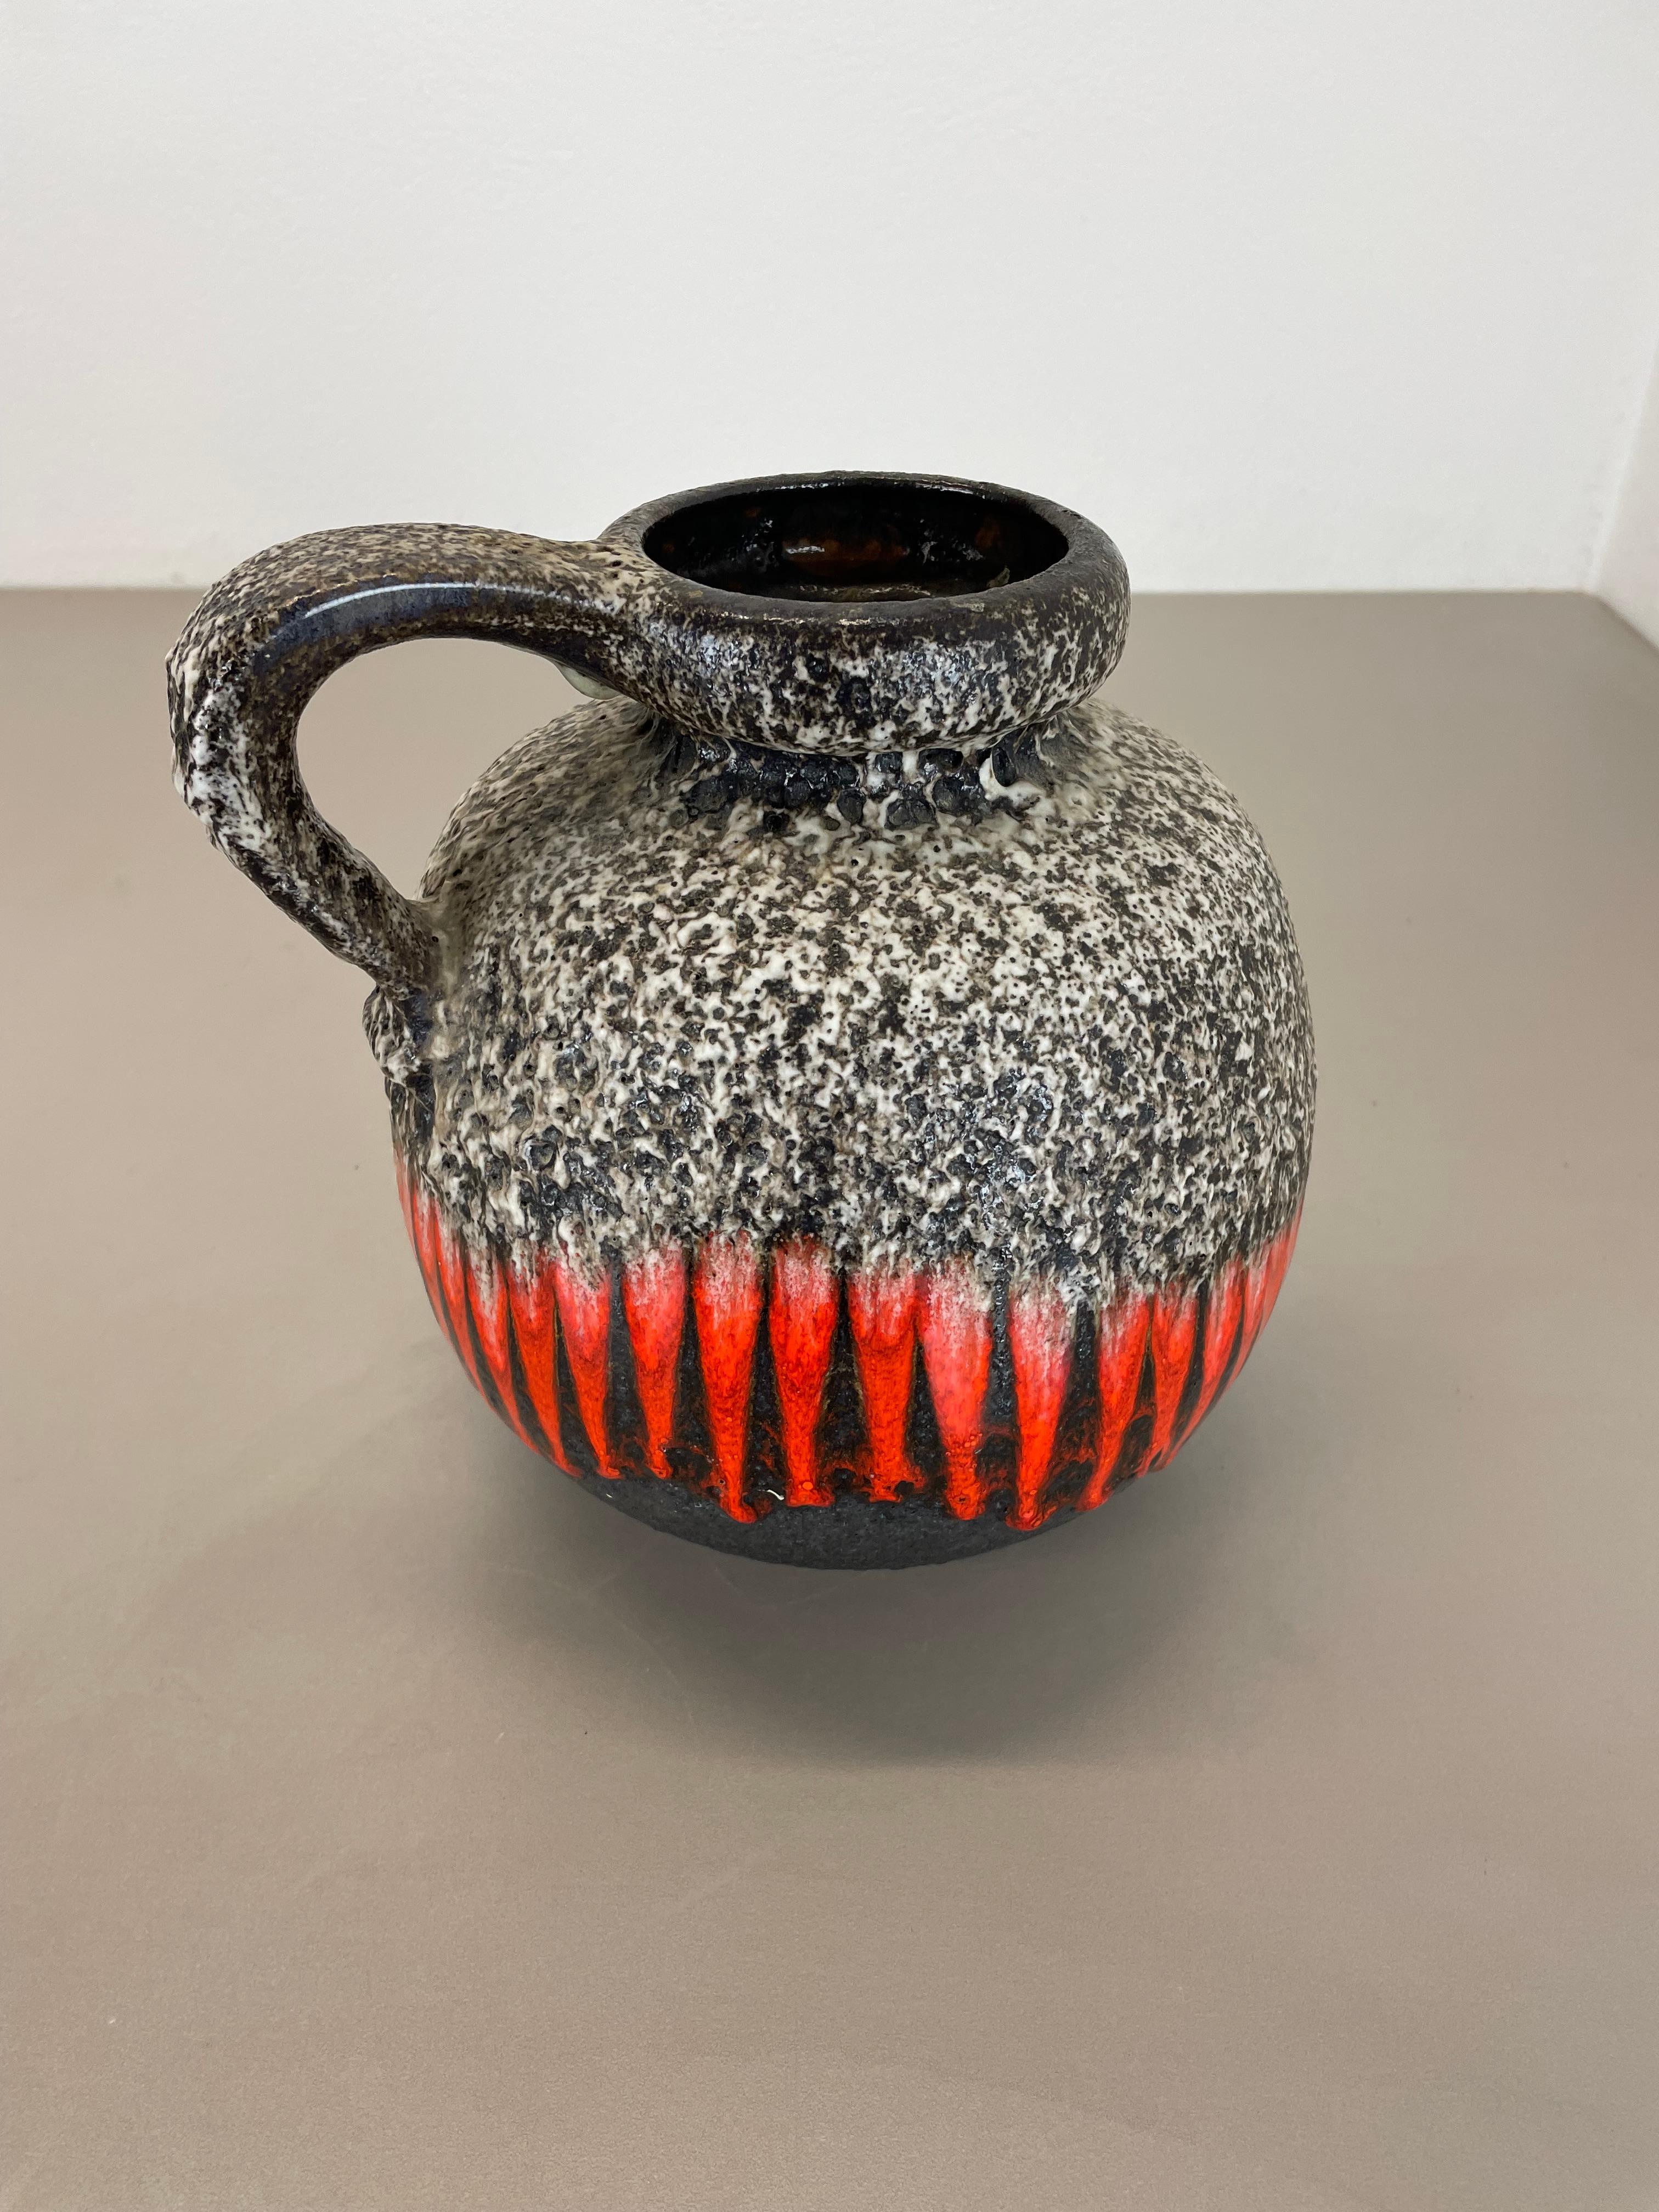 Poterie rare - Vase en lave grasse multicolore 